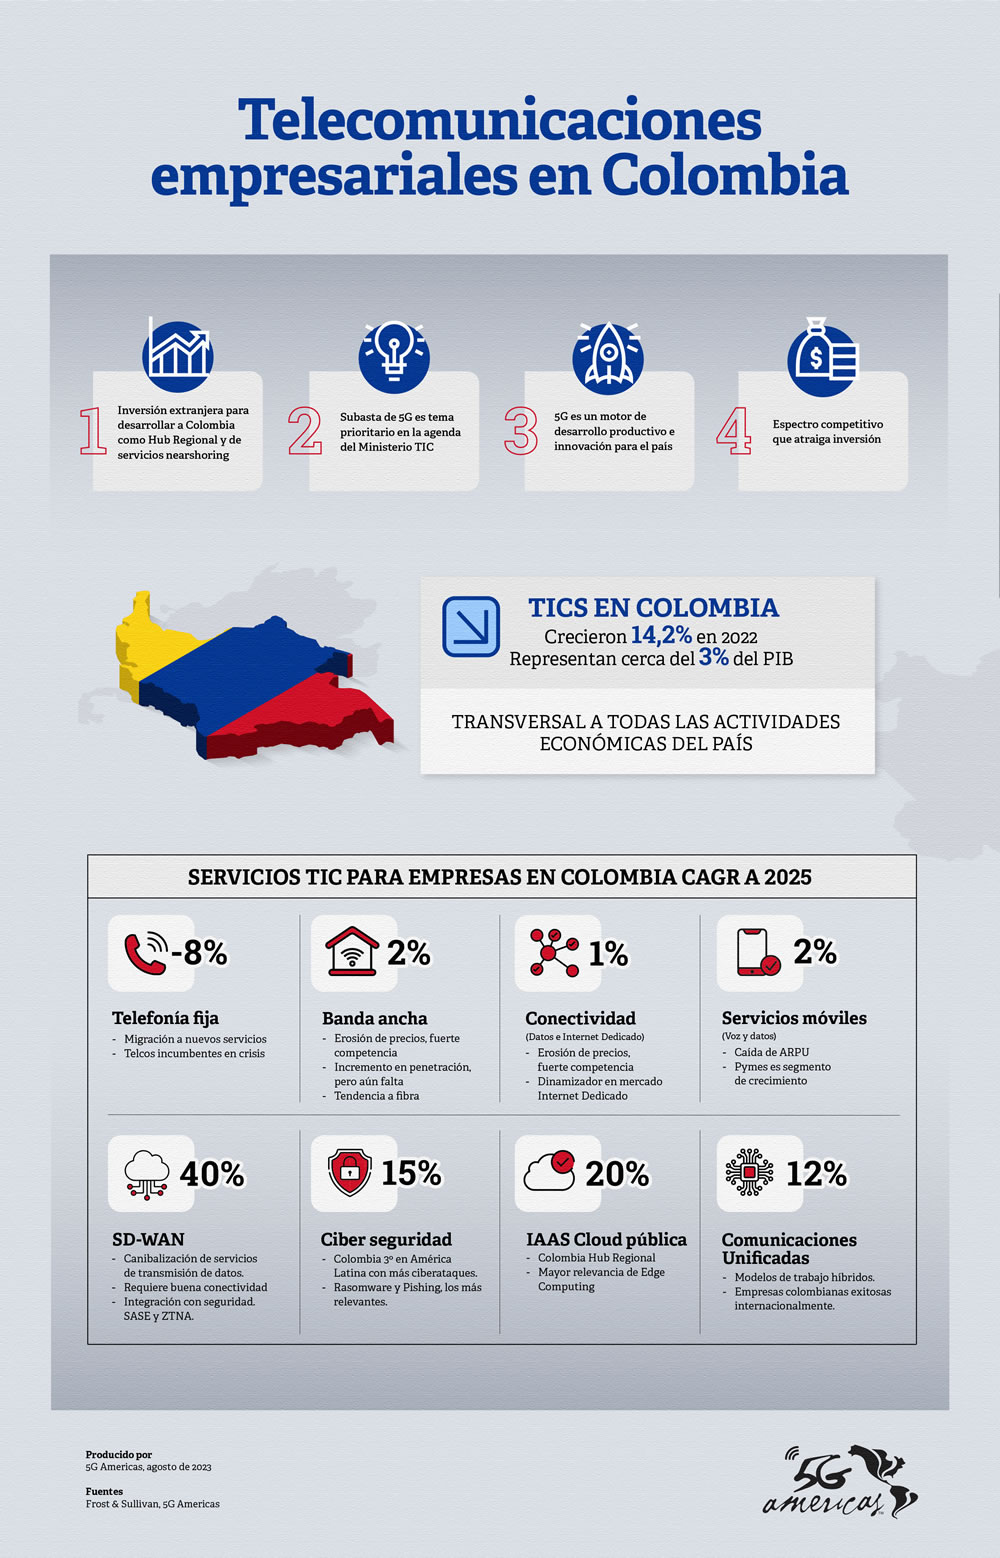 5G Americas: 5G motor de desarrollo productivo e innovaciÃ³n para Colombia